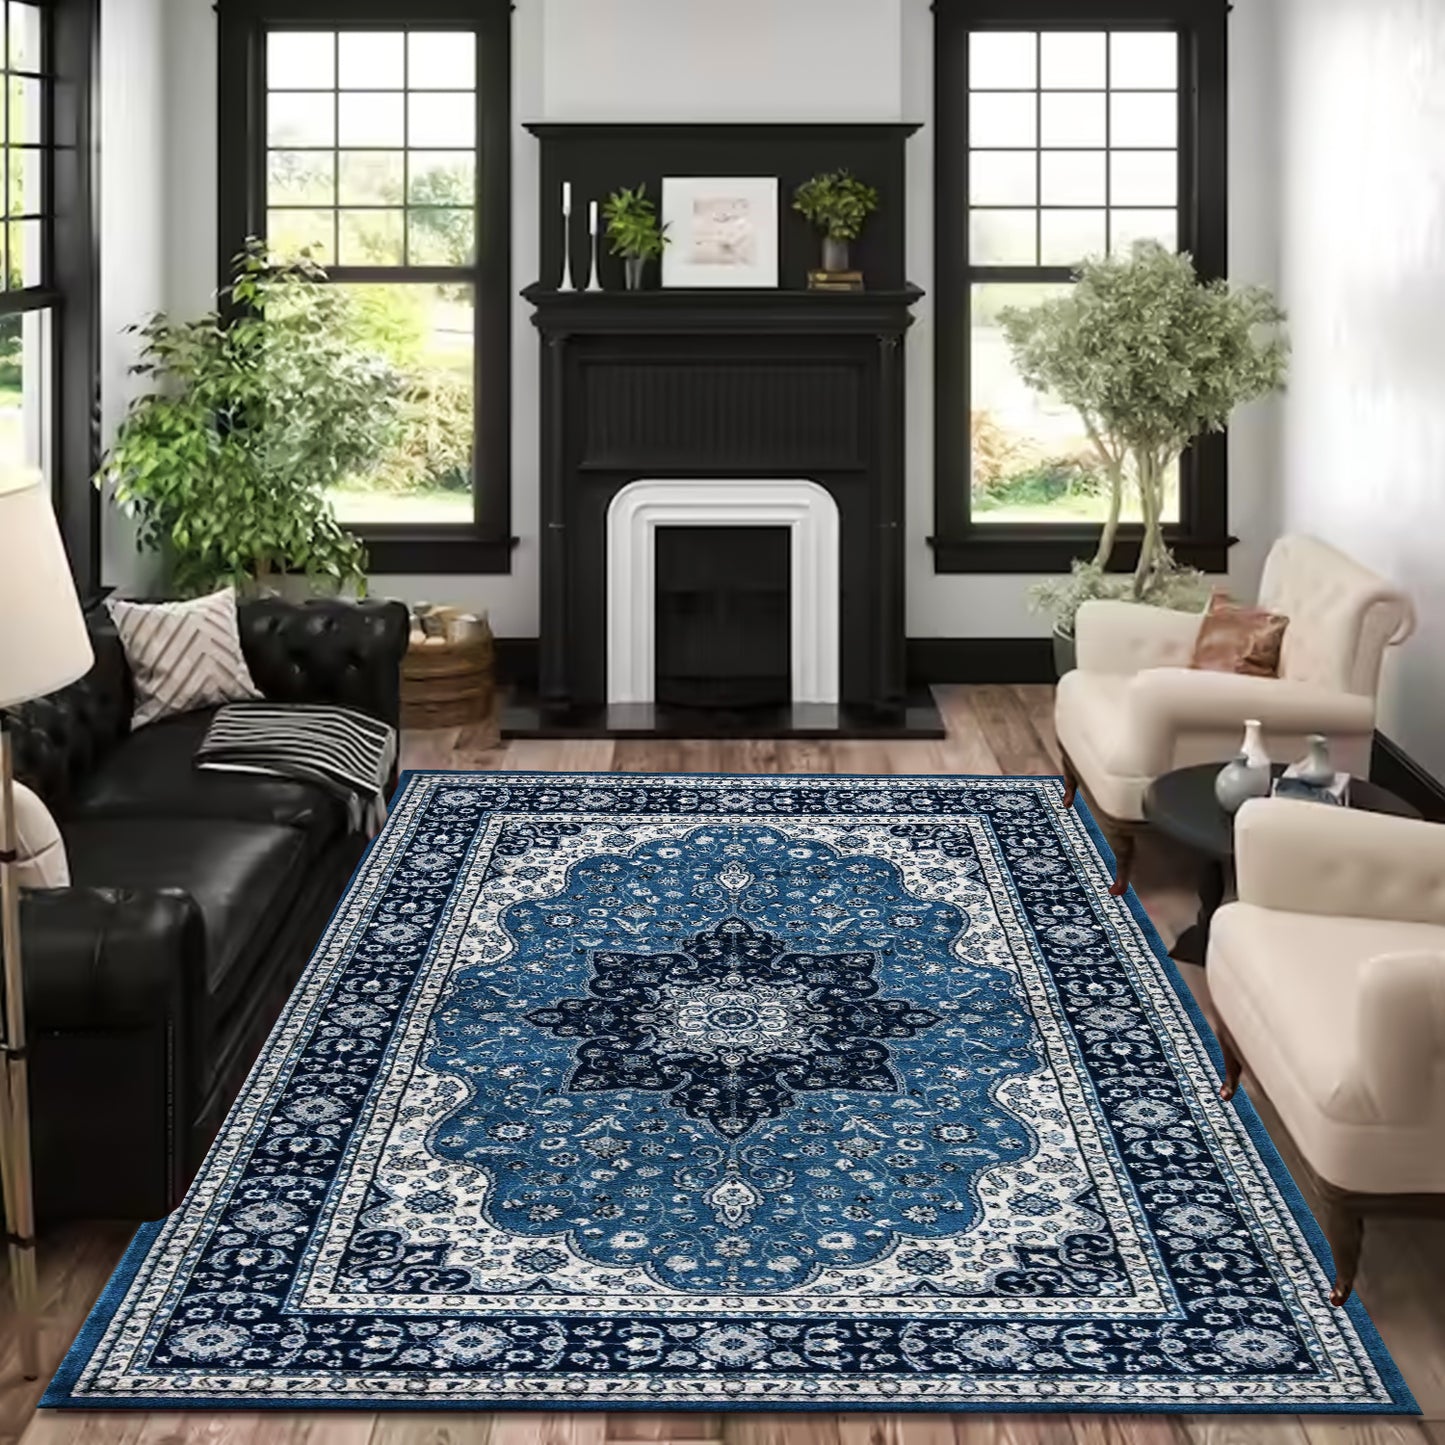 Non Slip Large Traditional Rugs Hallway Runner Rug Bedroom Living Room Carpet